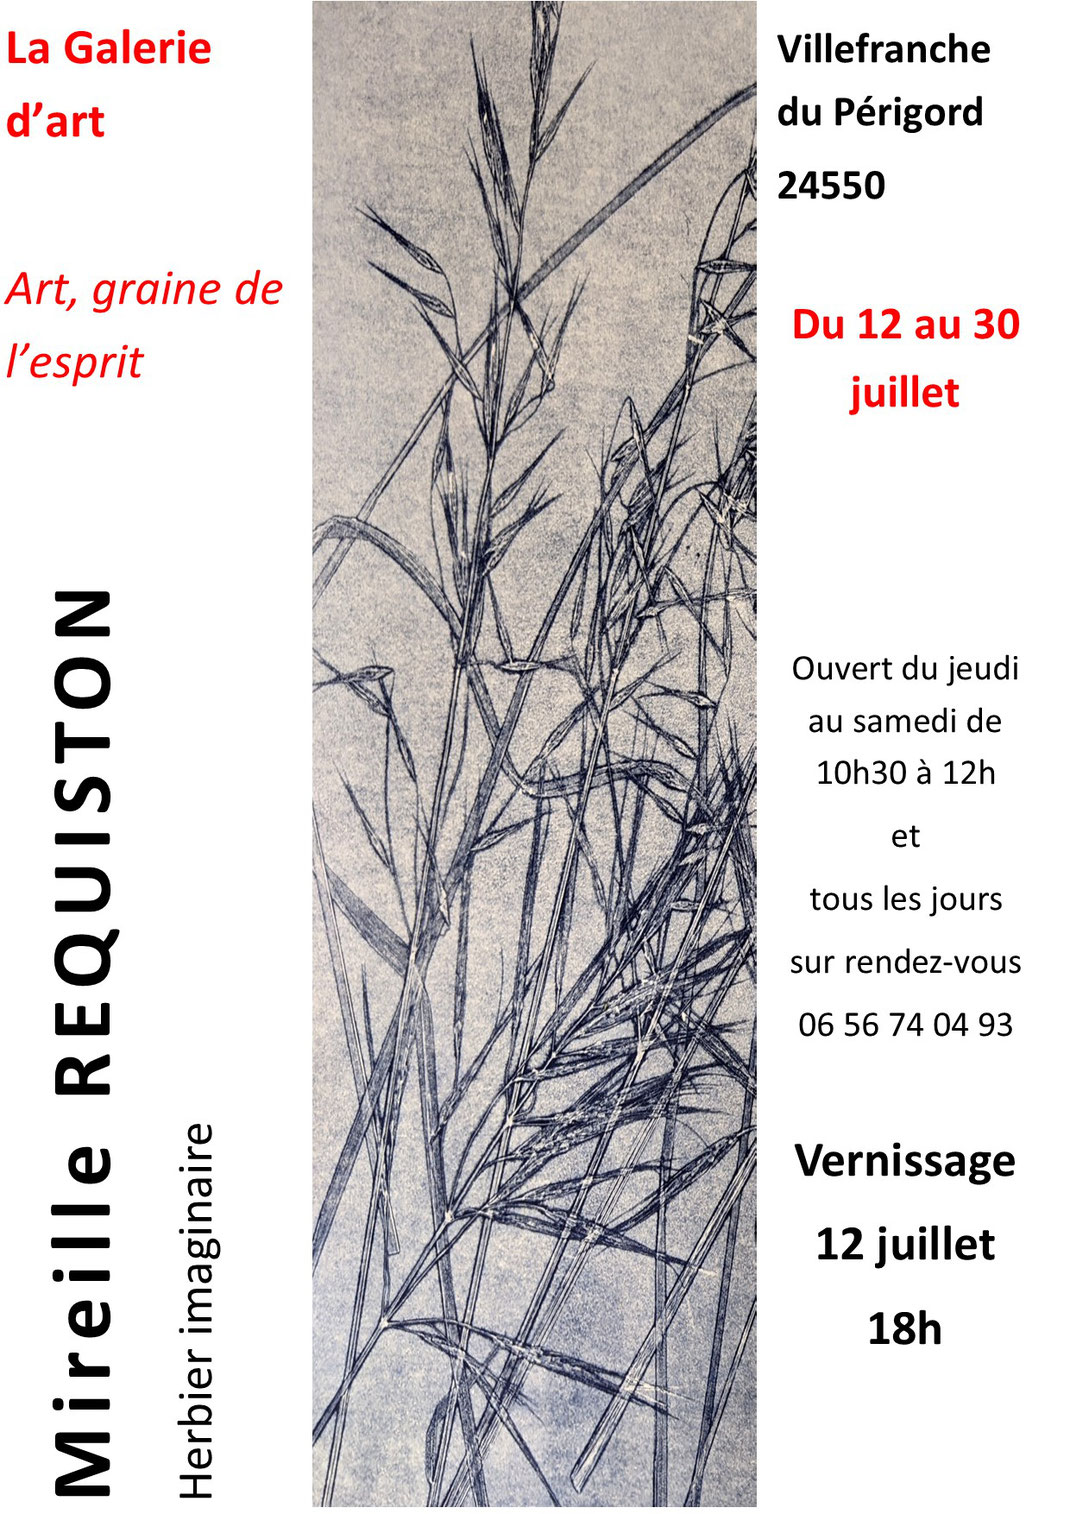 invitation vernissage exposition Requiston galerie d'art Villefranche du Périgord 12 juillet 18 heures